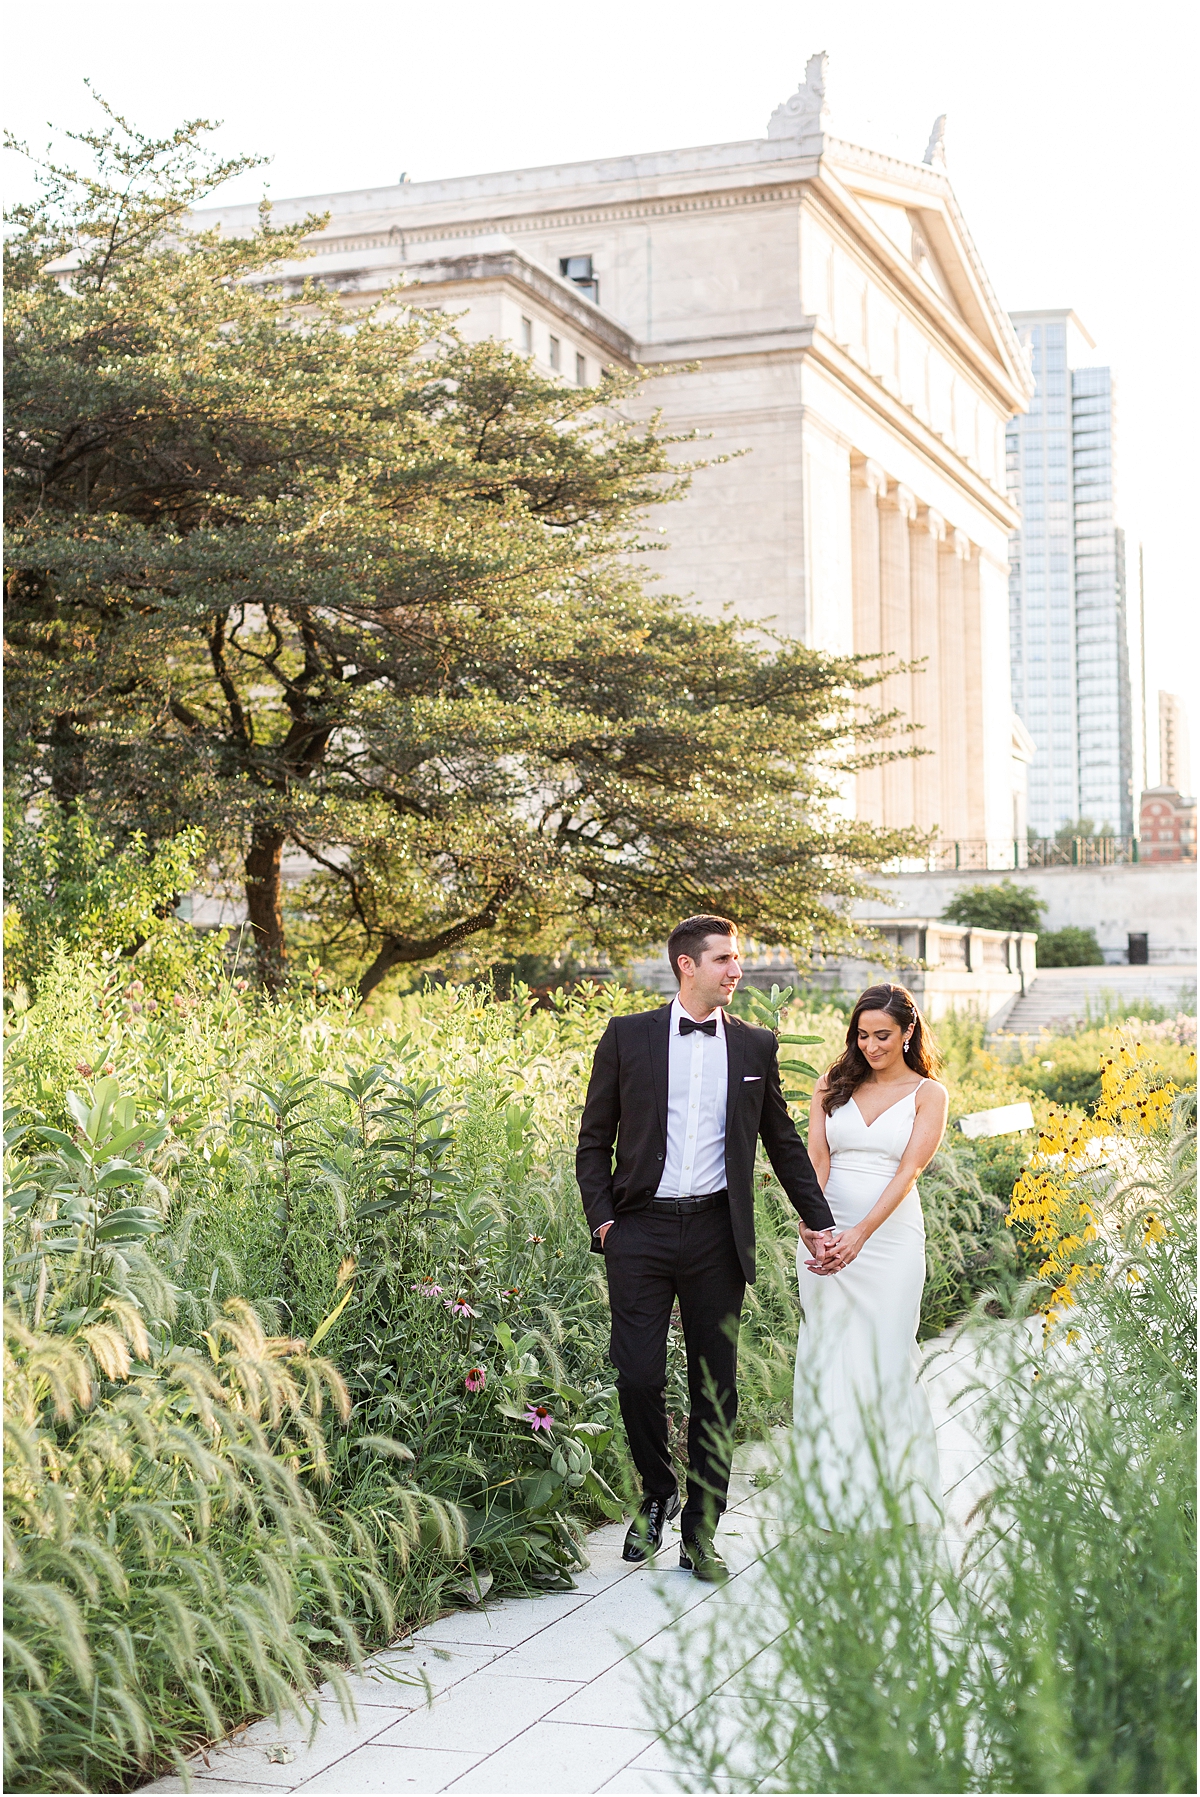 Romantic engagement photos by Alex Ferreri, a chicago based photographer 